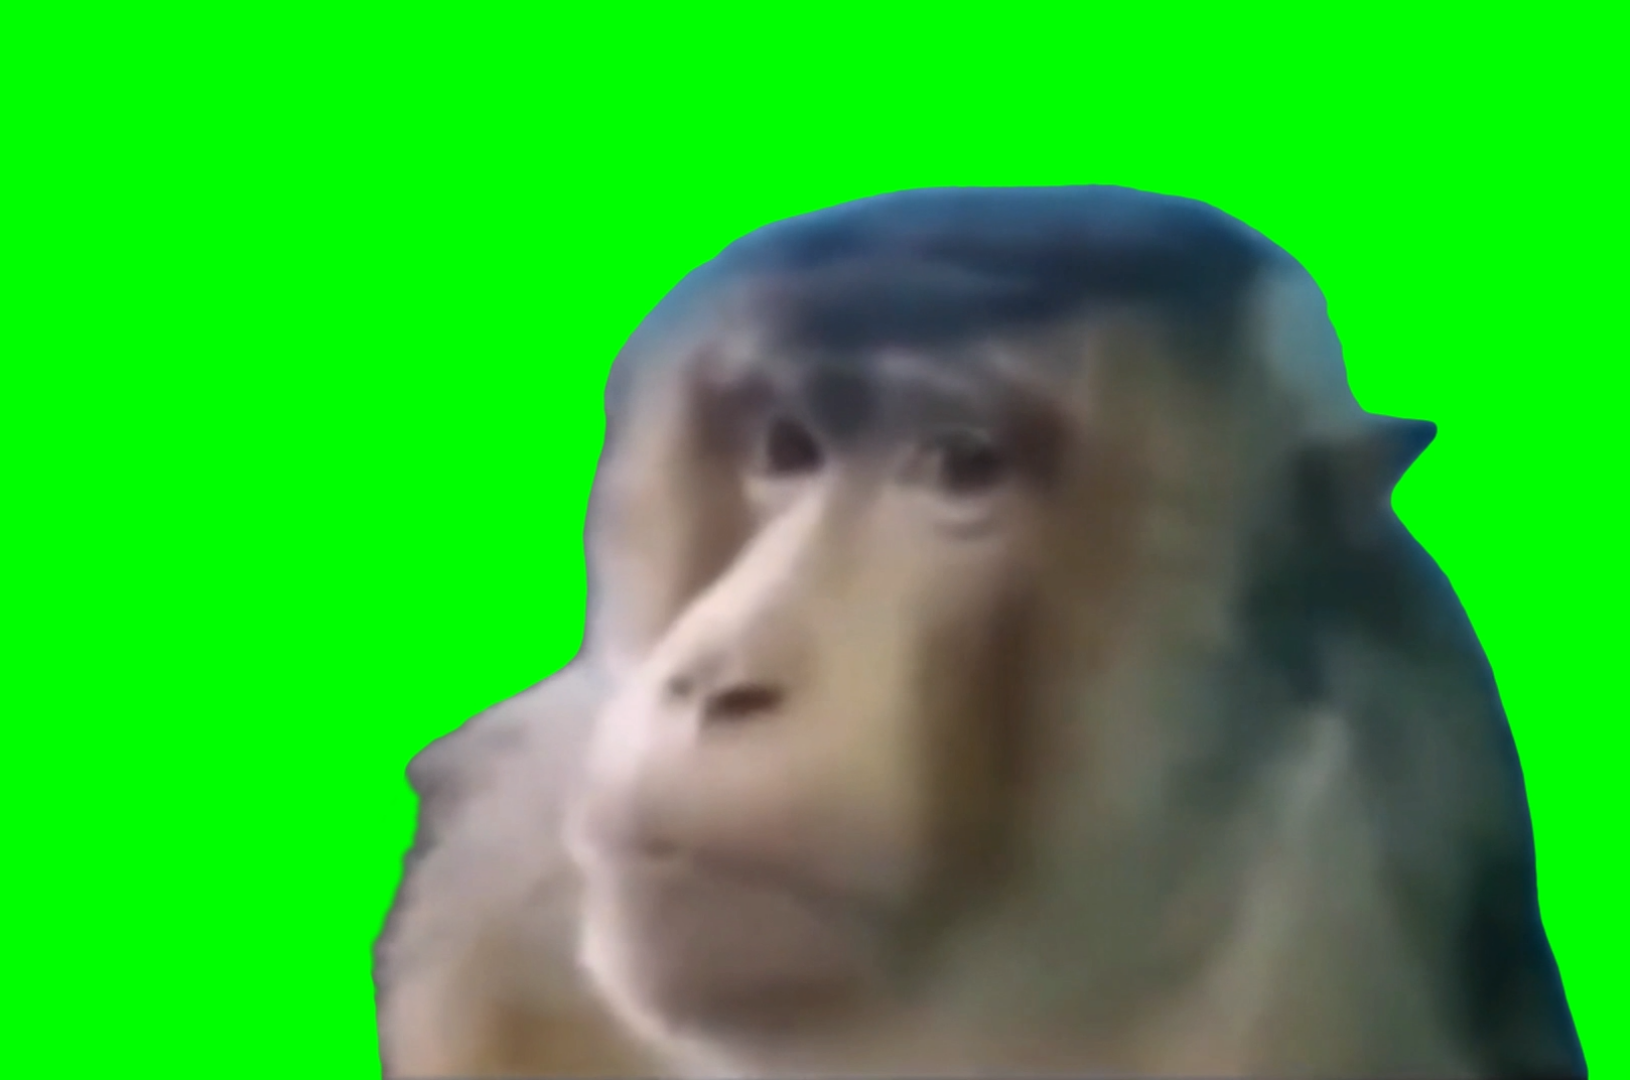 Monkey Side Eye with FNAF 2 ambience meme (Green Screen) – CreatorSet